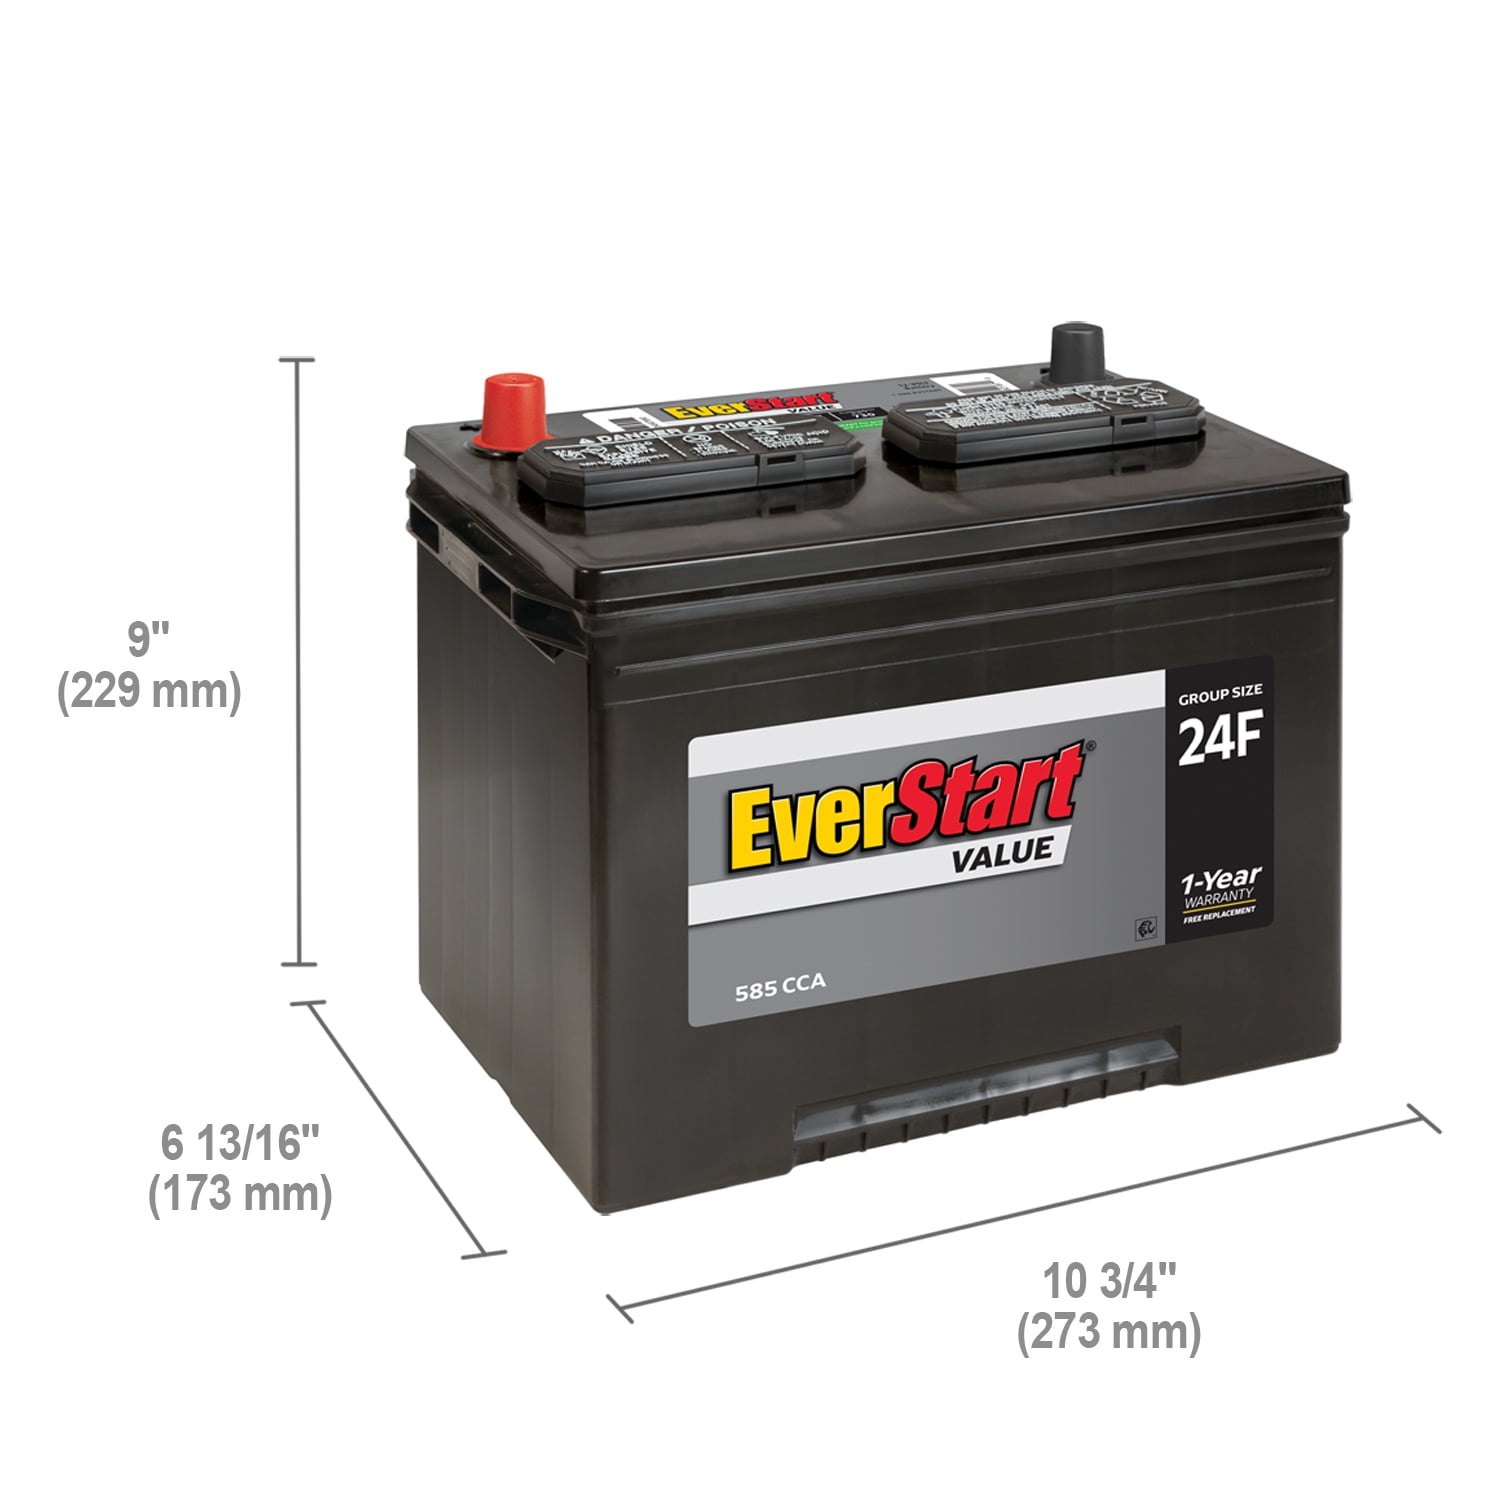 EverStart Value Lead Acid Automotive Battery, Group Size 24F 12